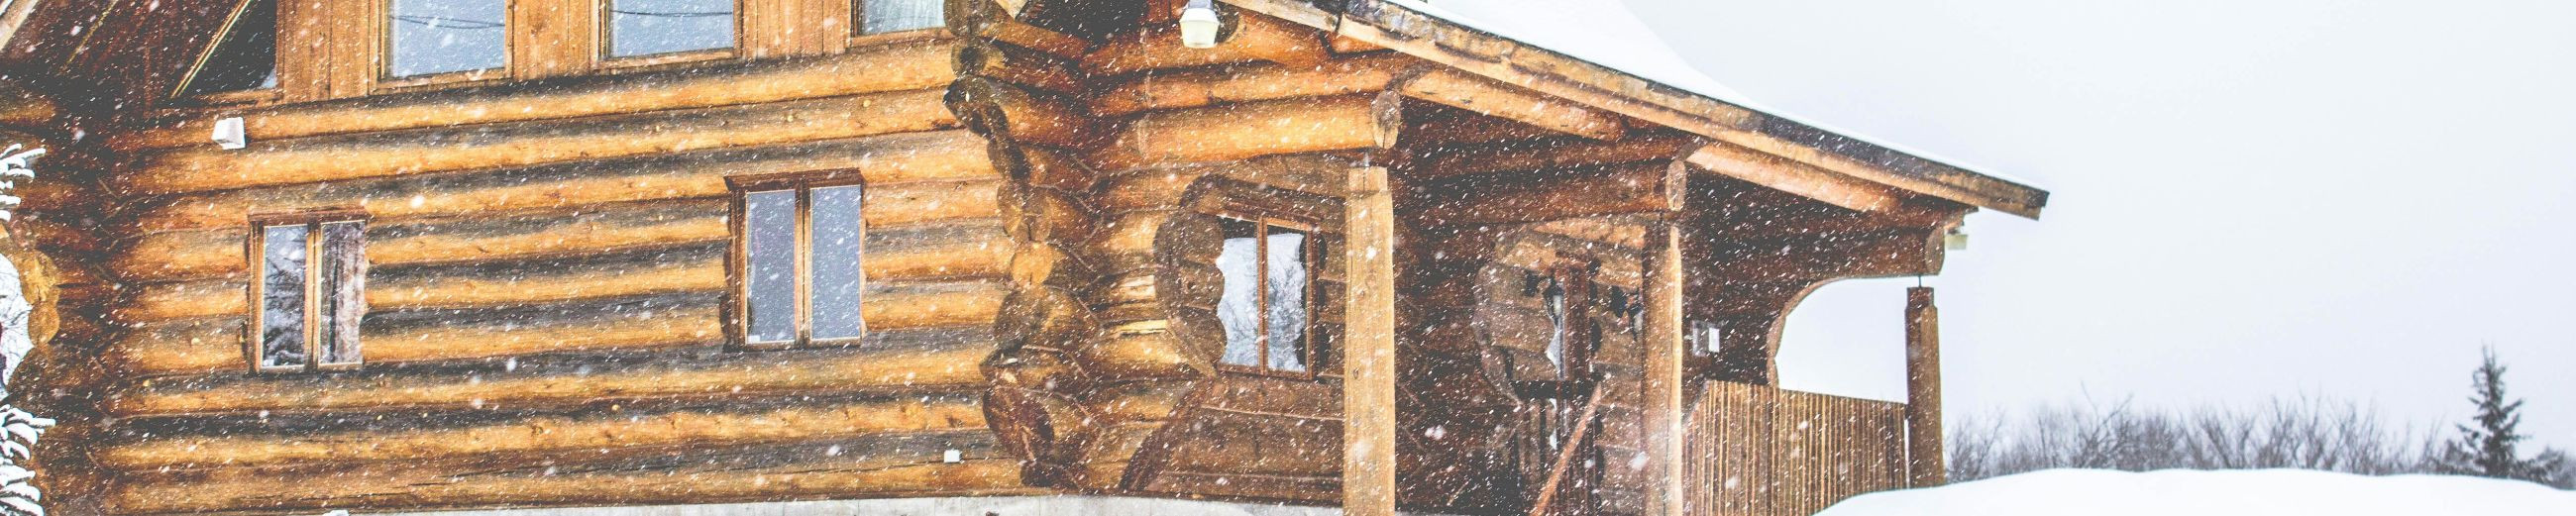 handmade log houses from estonian manufacturer, edged log houses, round log houses, salary/framed houses, Ecological, handmade log houses from estonian manufacturer, unrimmed log houses, log/frame houses